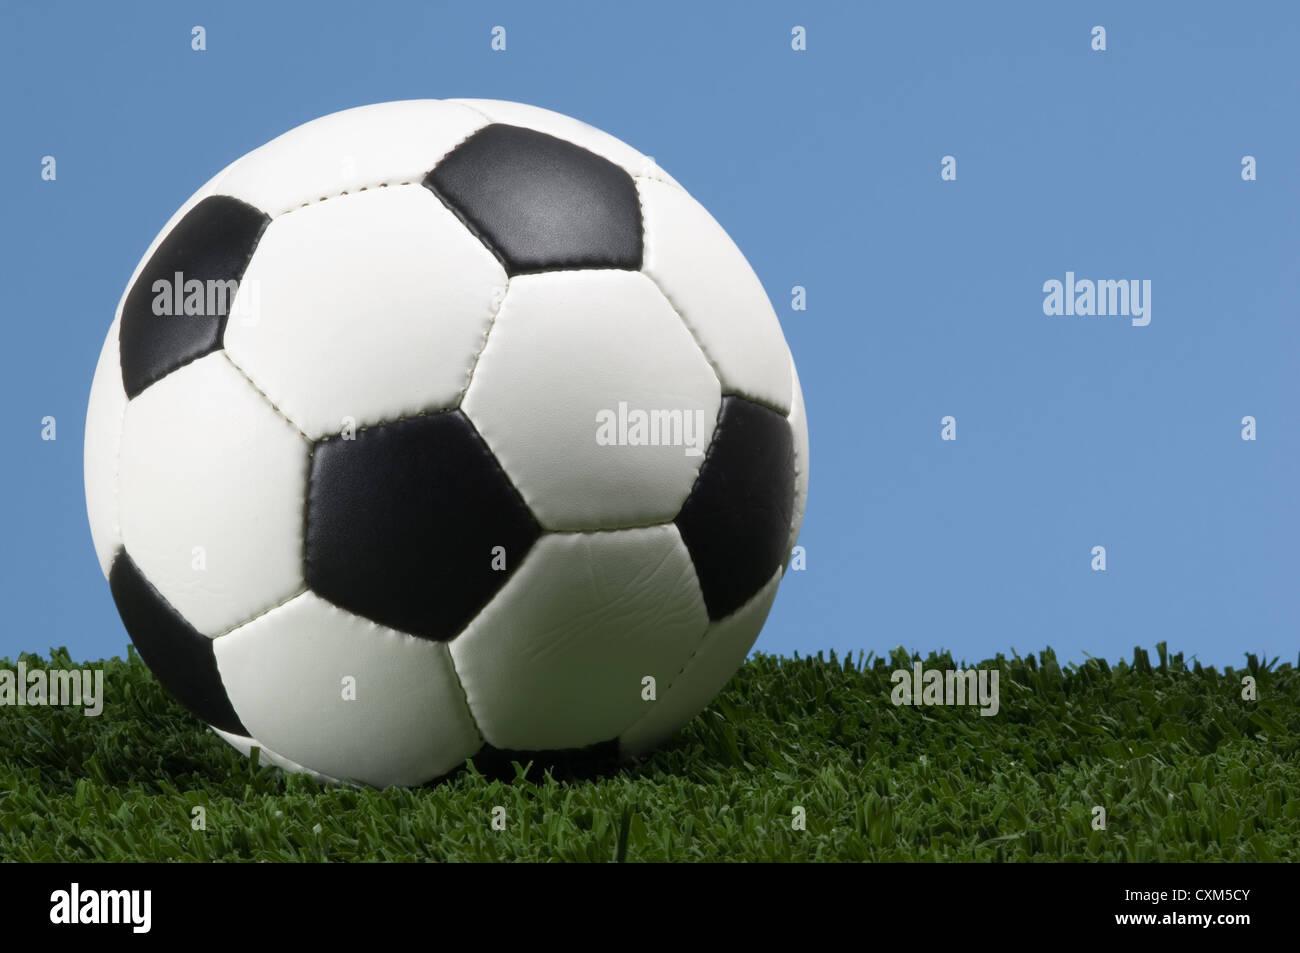 Football, ballon de football sur herbe avec ciel bleu Banque D'Images